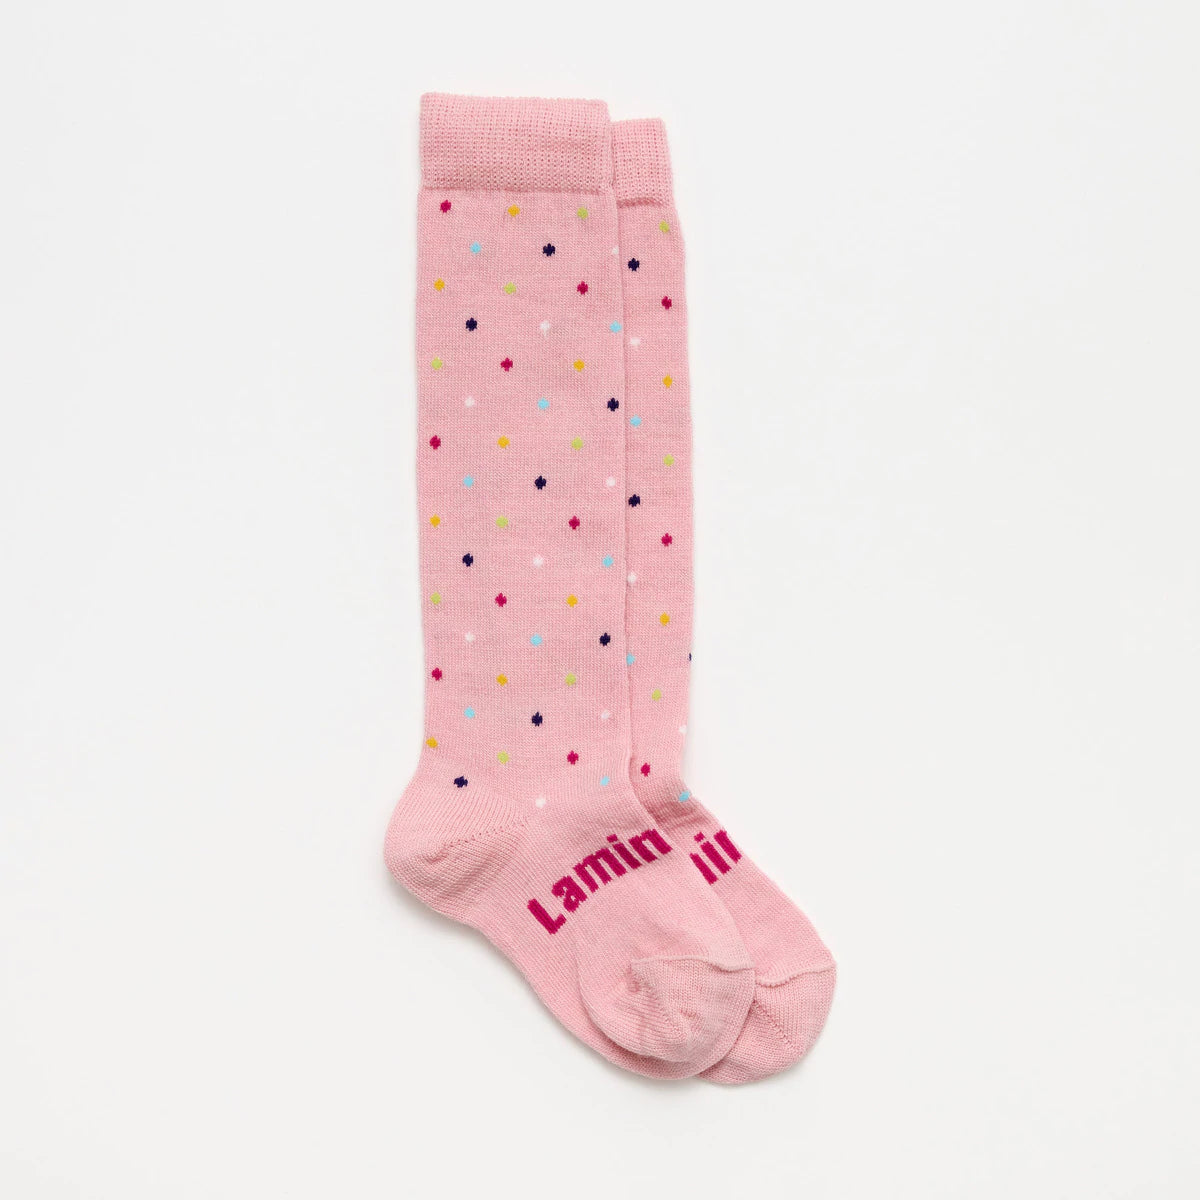 Merino Wool Crew Socks | Knee High Socks | Hundreds and Thousands | Size 4-6Y